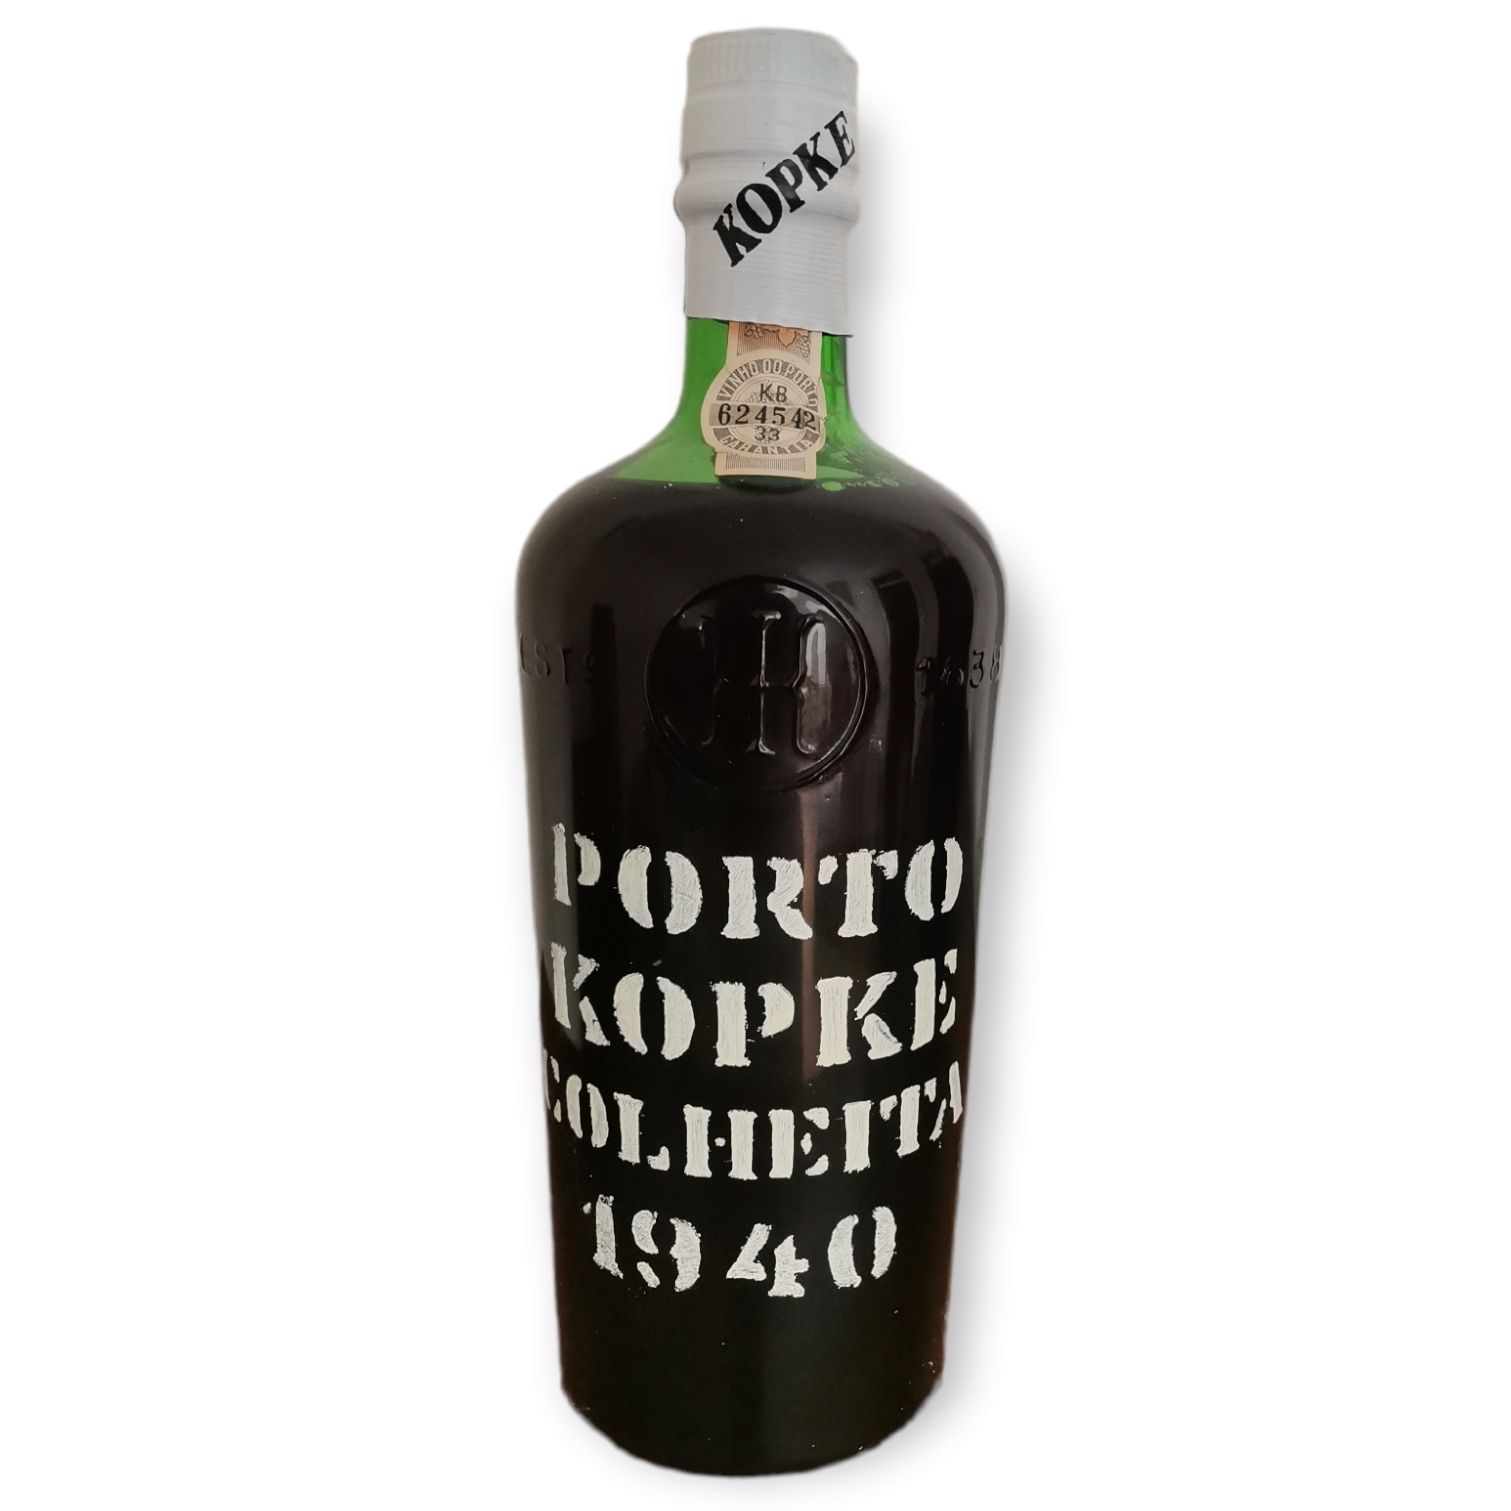 Kopke Bouteille de vin de Porto KOPKE. Récolte de 1940, mise en bouteille en 198&hellip;